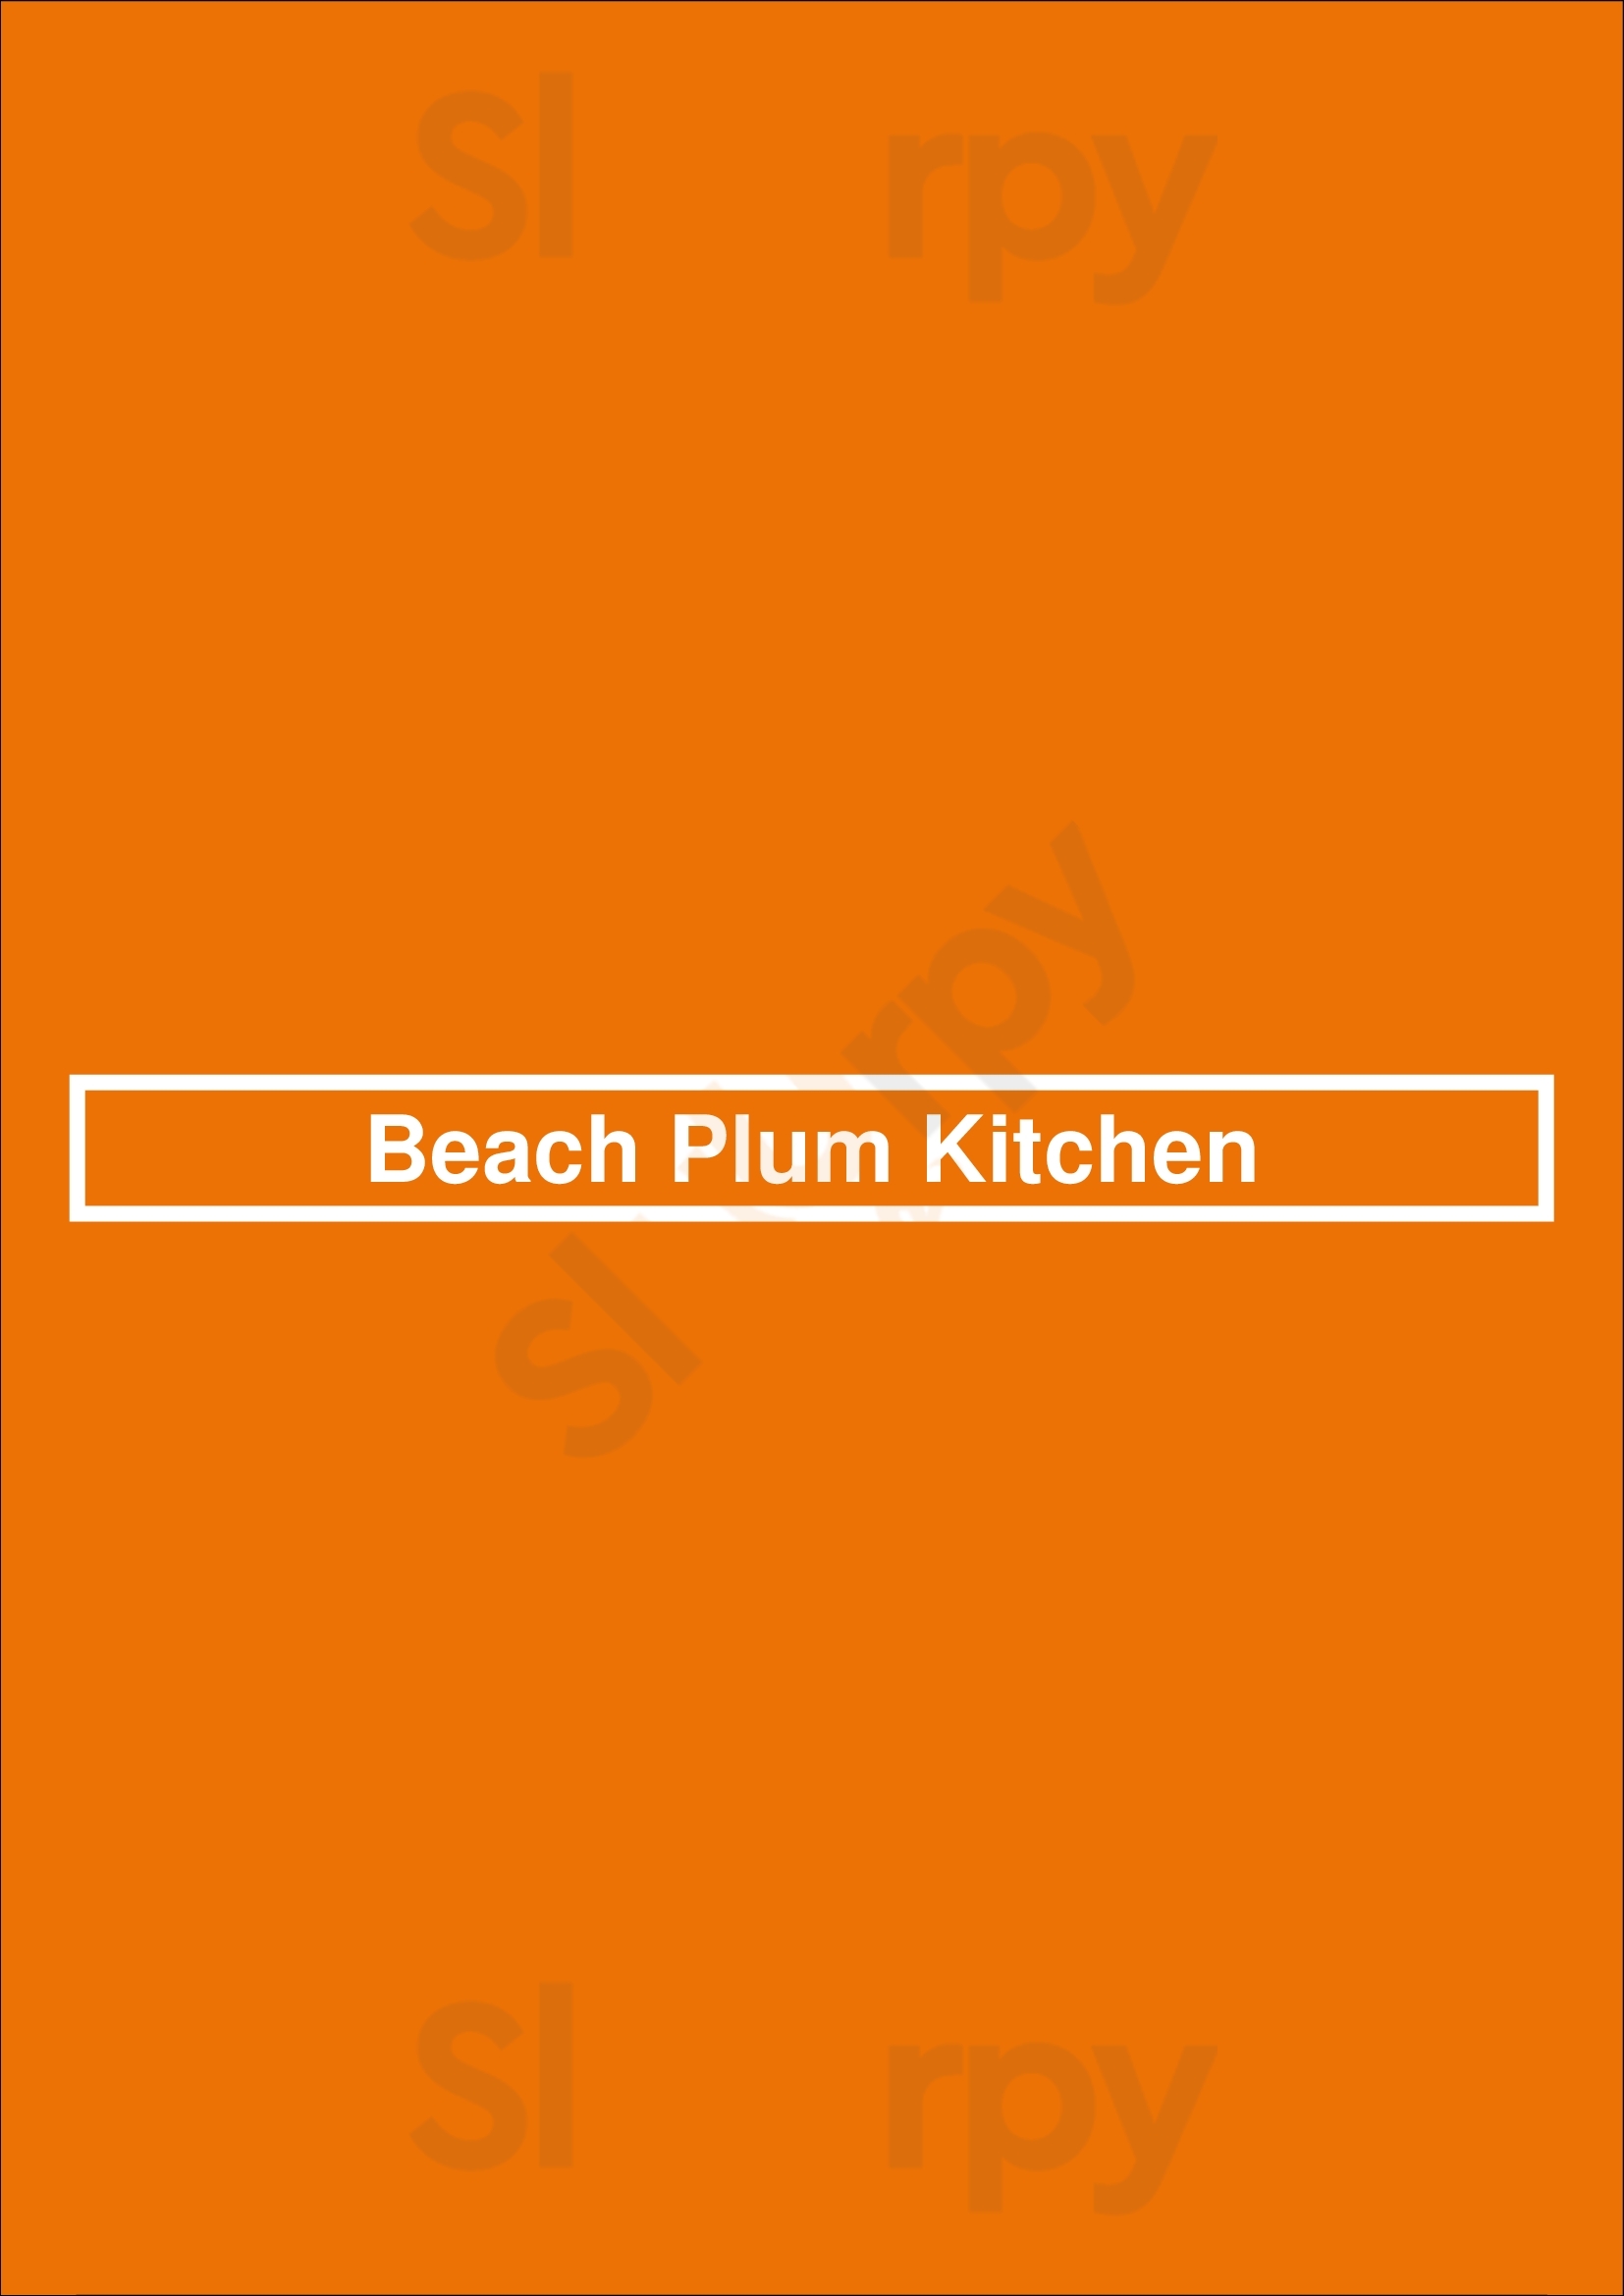 Beach Plum Kitchen Carlsbad Menu - 1